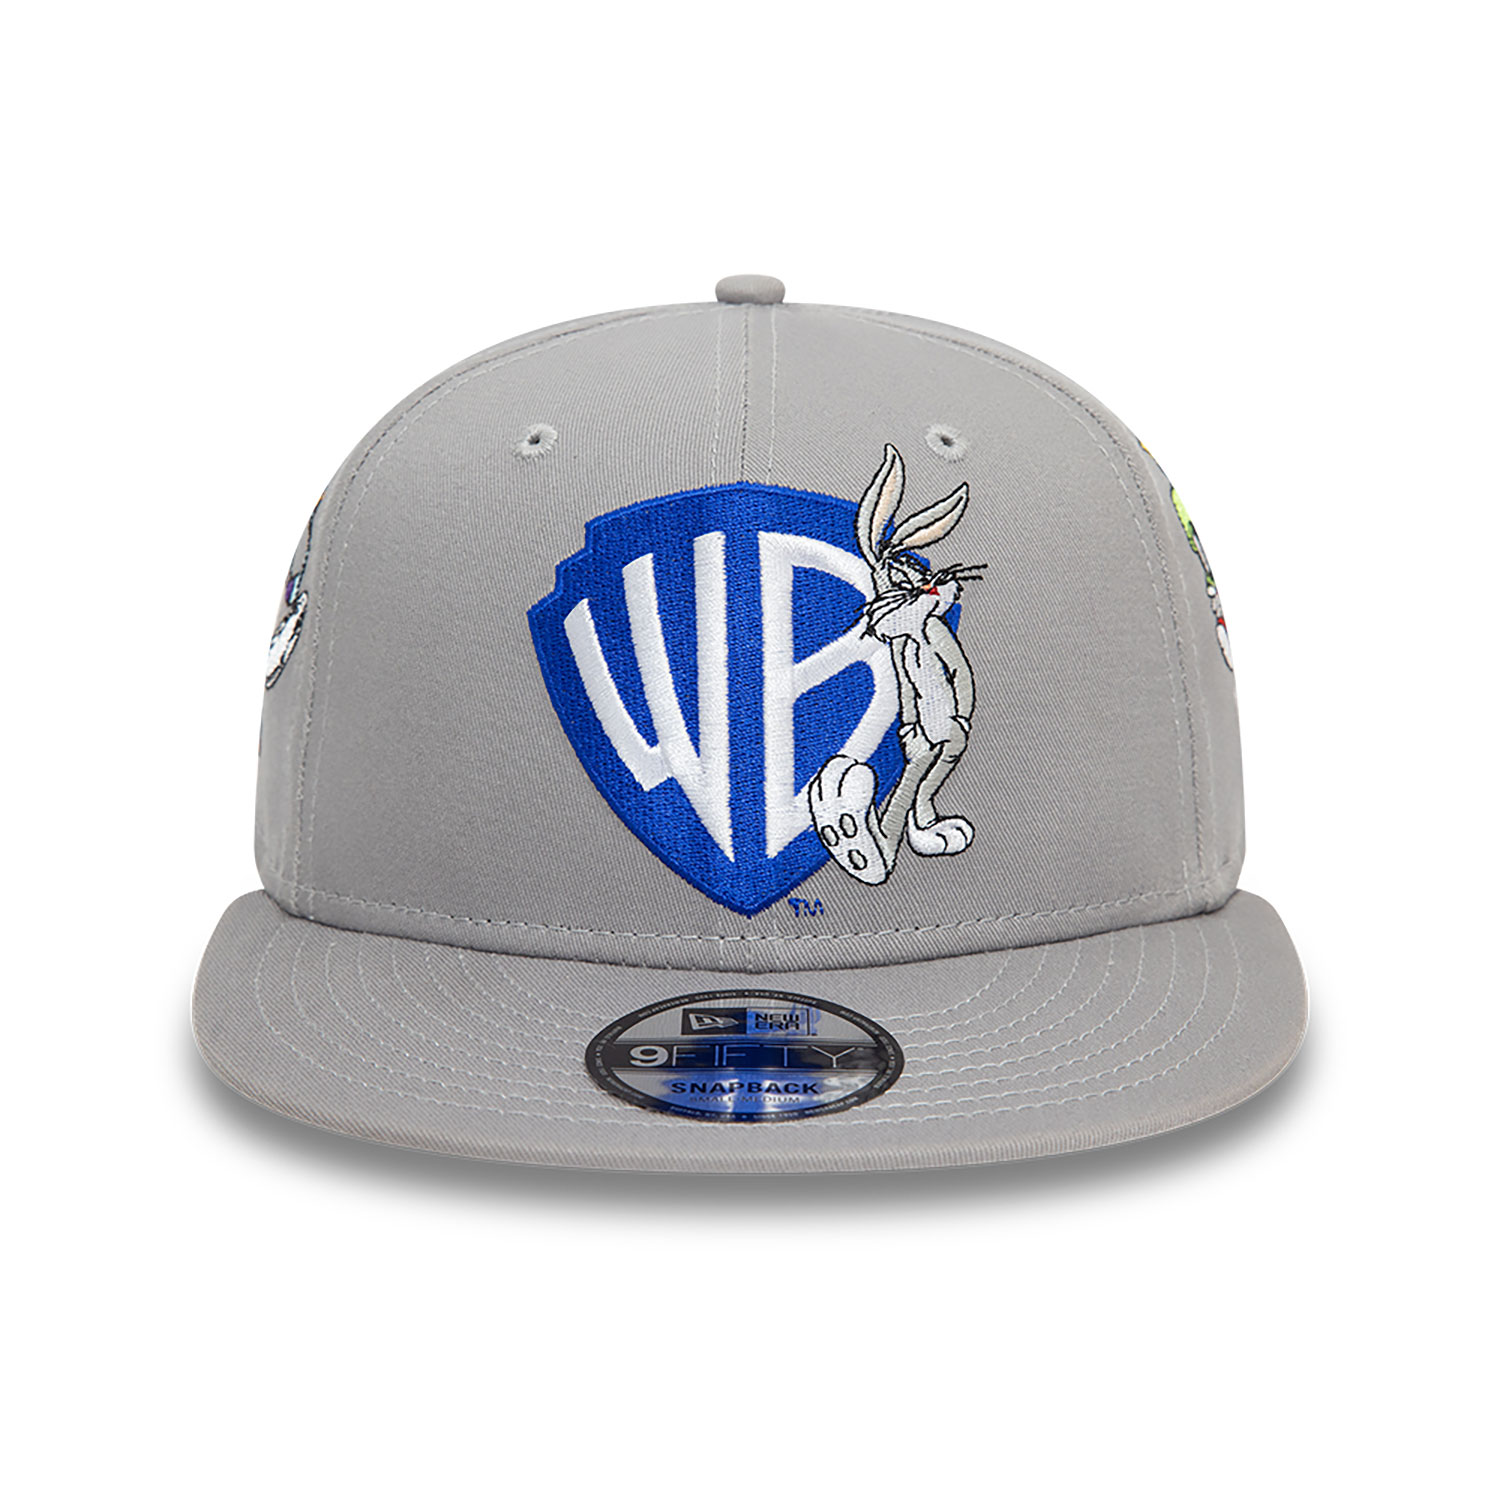 Warner Brothers Shield Logo Bugs Bunny Grey 9FIFTY Snapback Cap